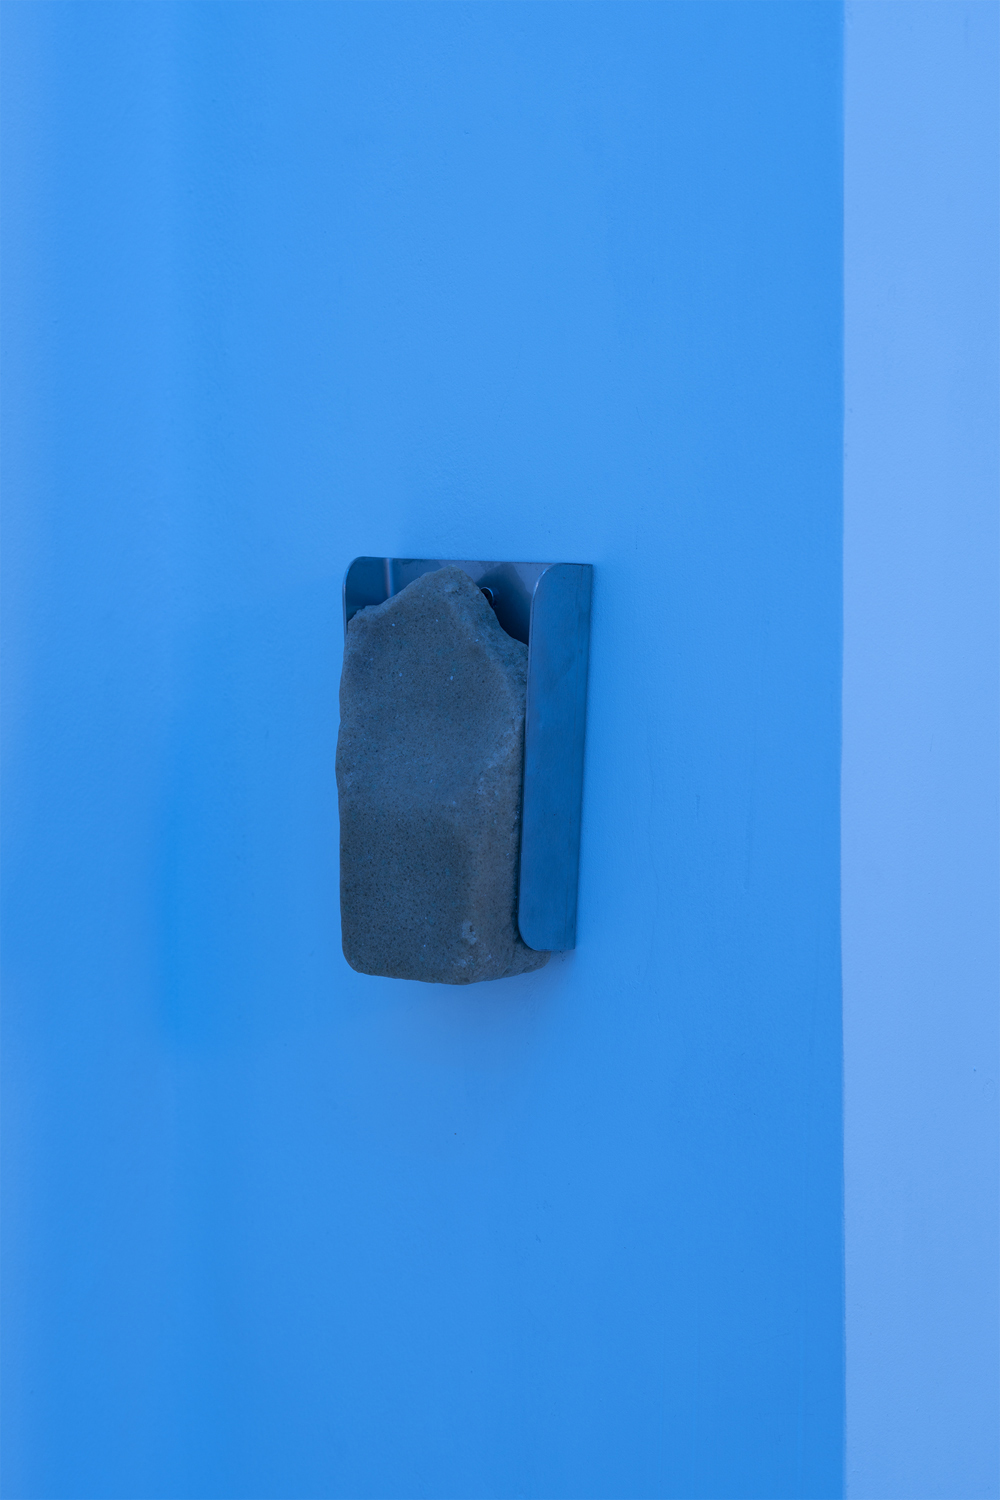 Fathia Mohidin &amp; Adele Kosman, Licking Stone, 2022 (Lick stone, stainless steel hanger, 17 x 11 x 5.5 cm).